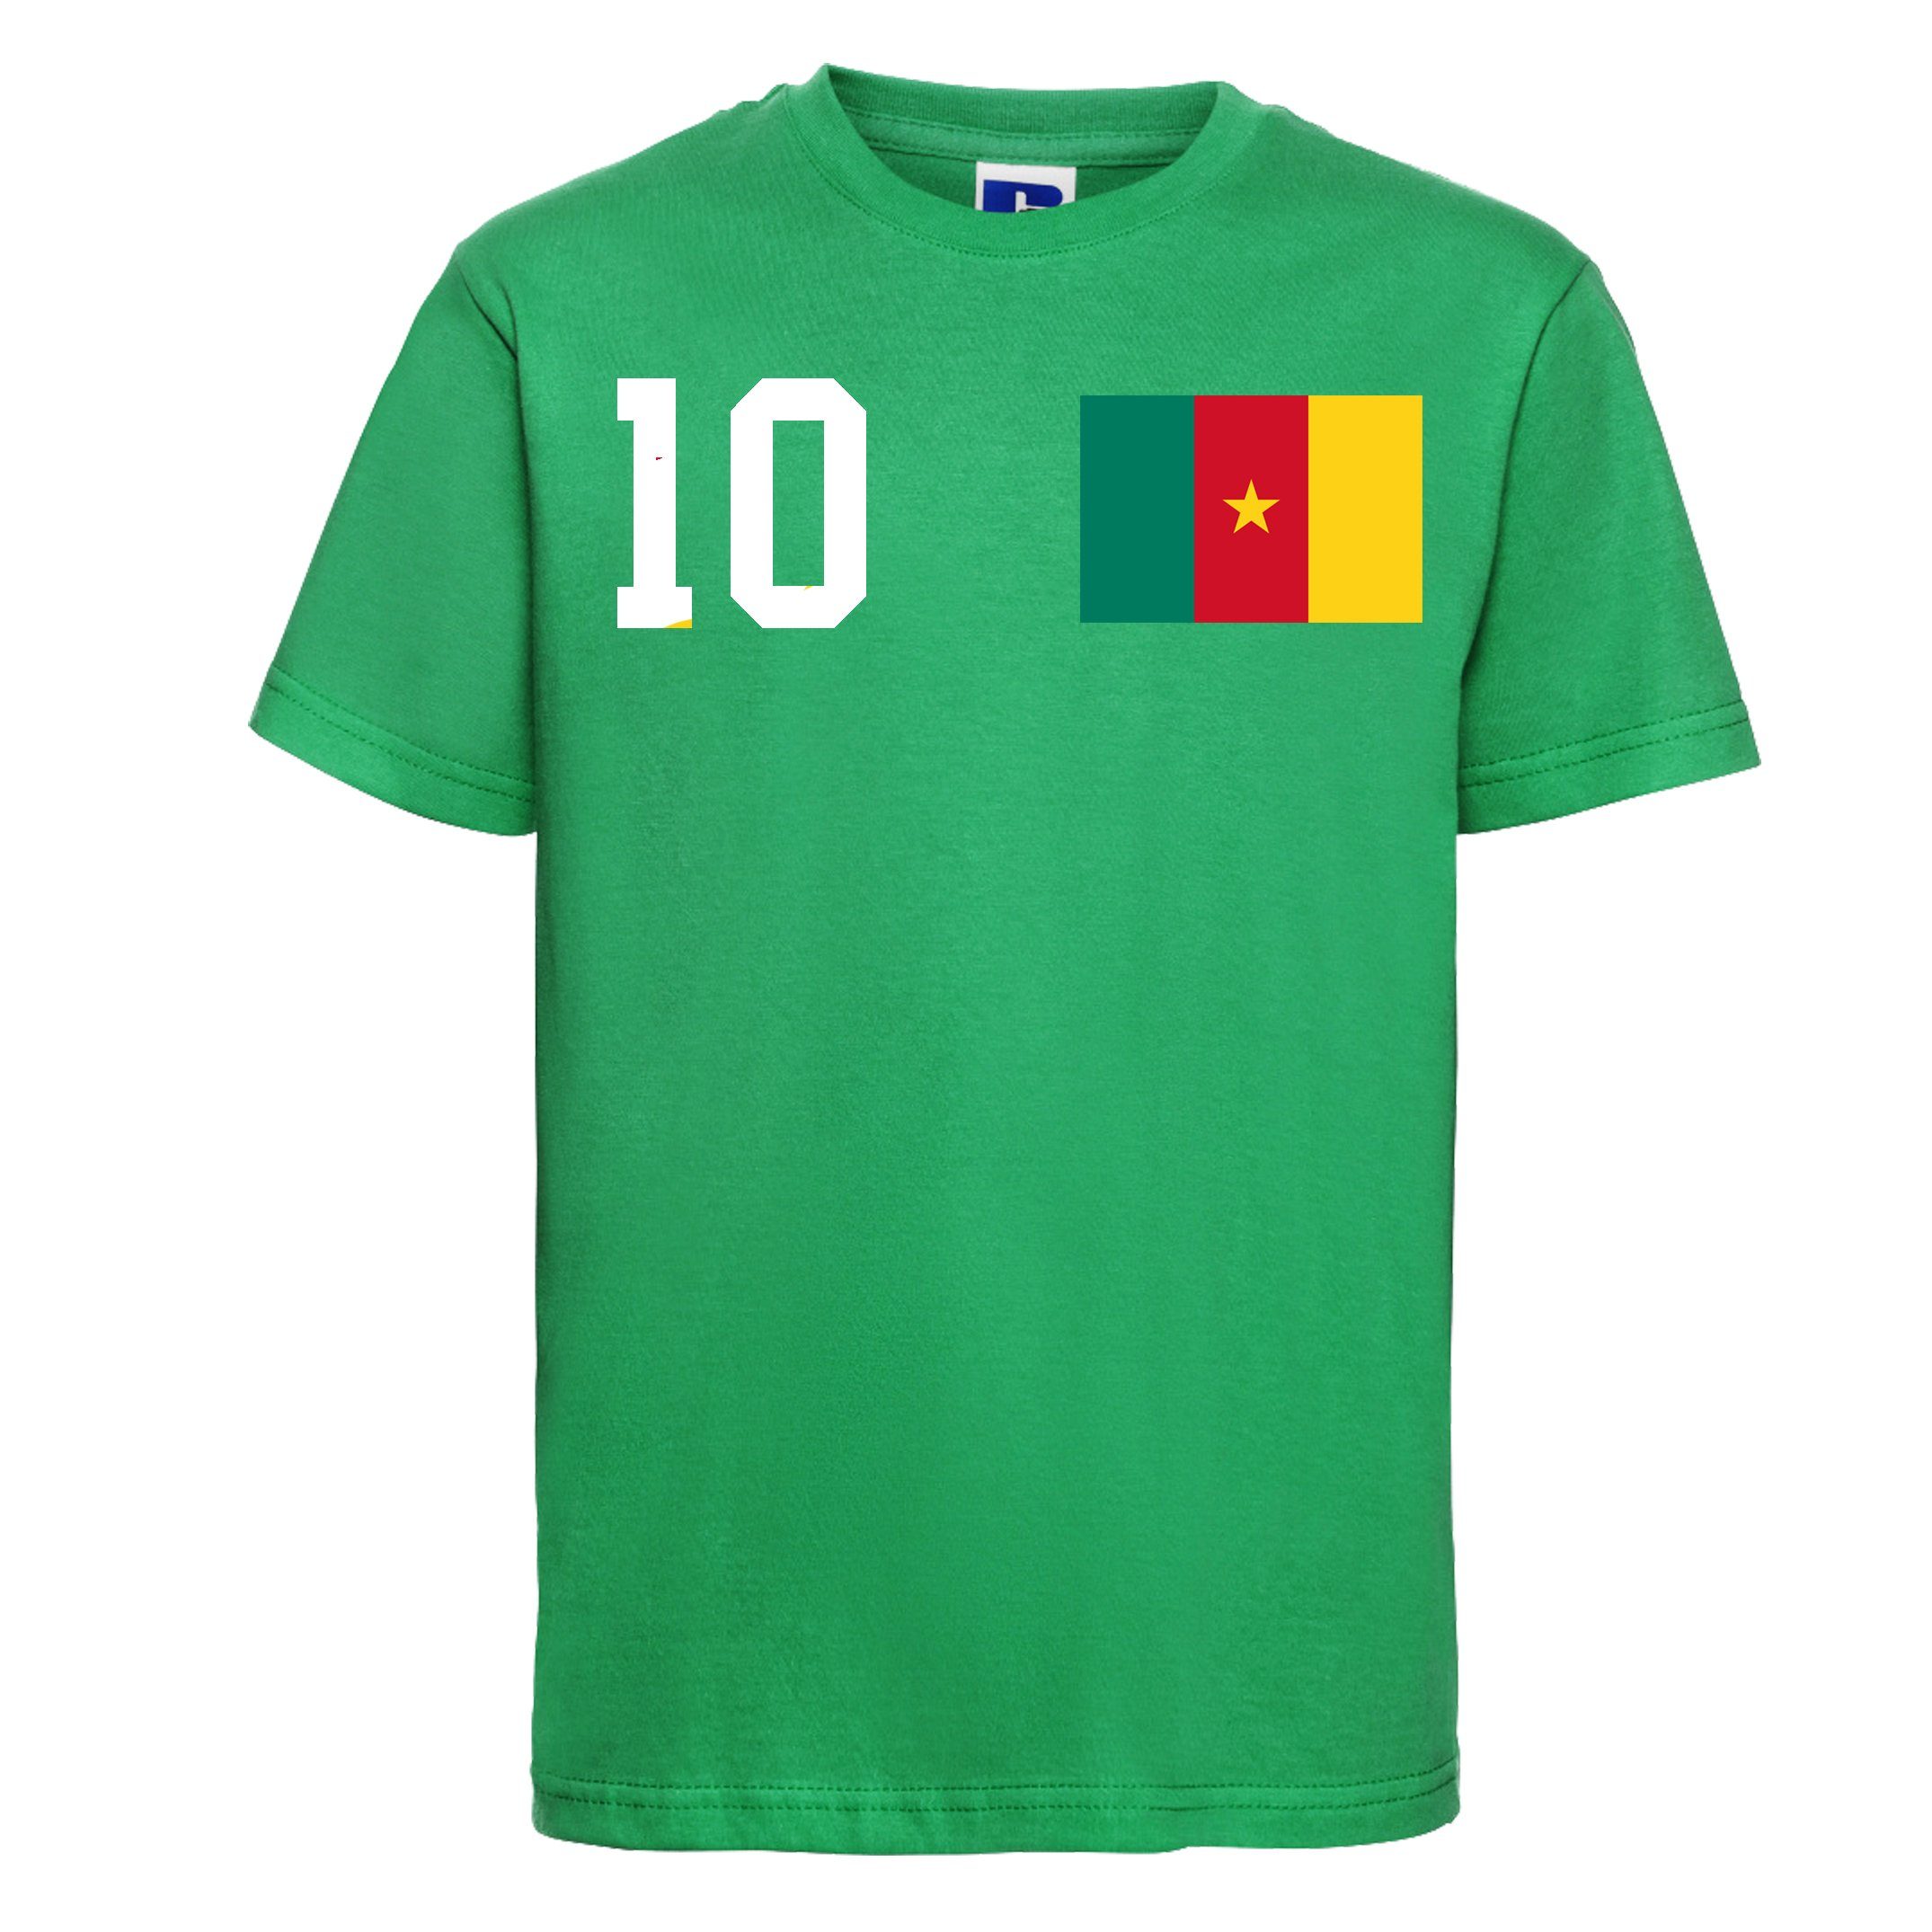 Youth Designz mit Fußball Kamerun trendigem Look Shirt im Motiv Kinder Trikot T-Shirt